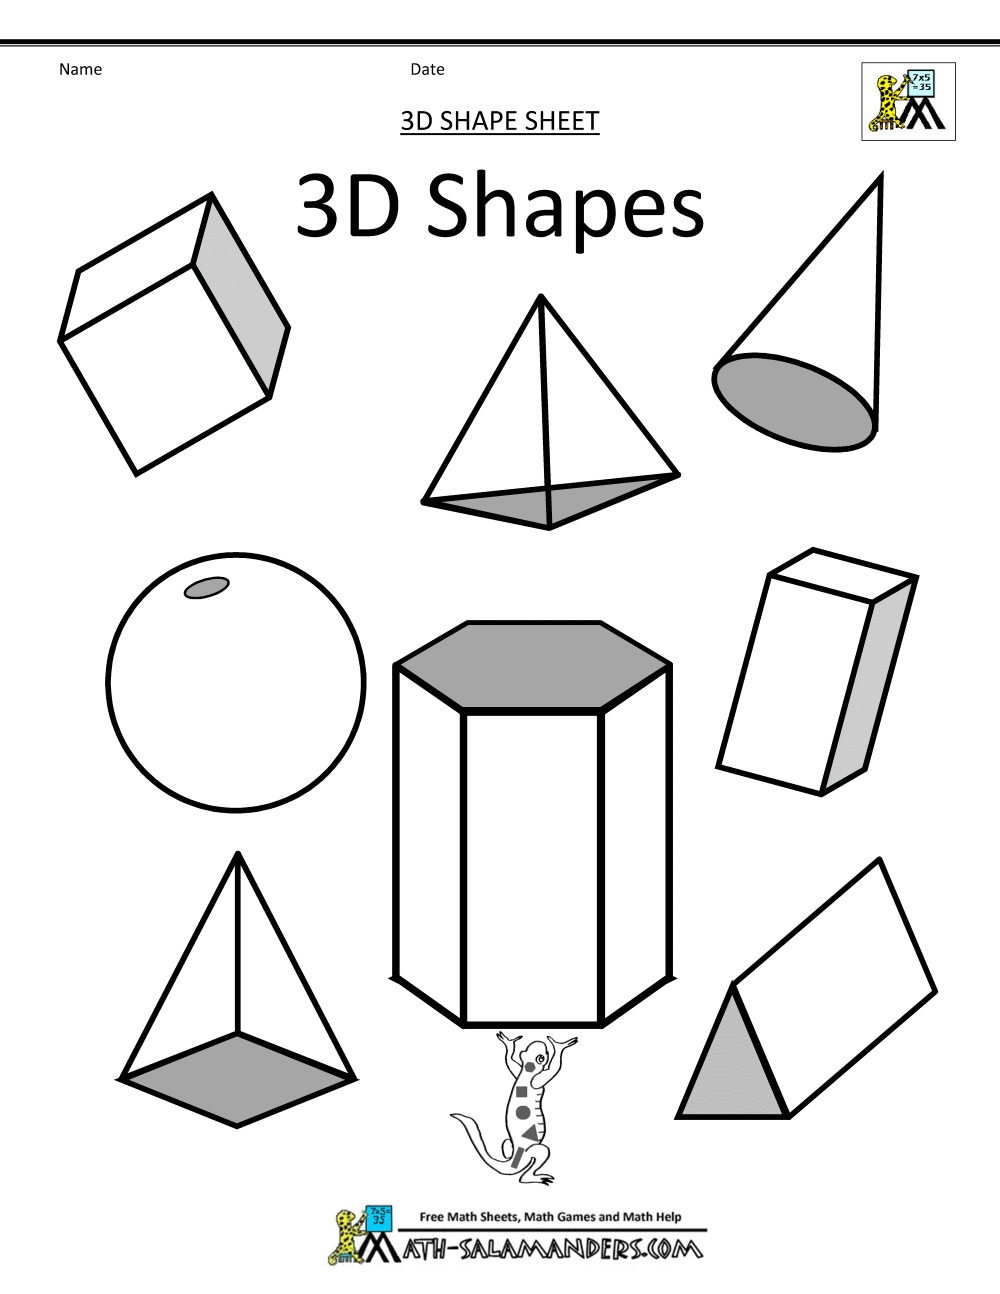 free-3d-shape-cliparts-download-free-3d-shape-cliparts-png-images